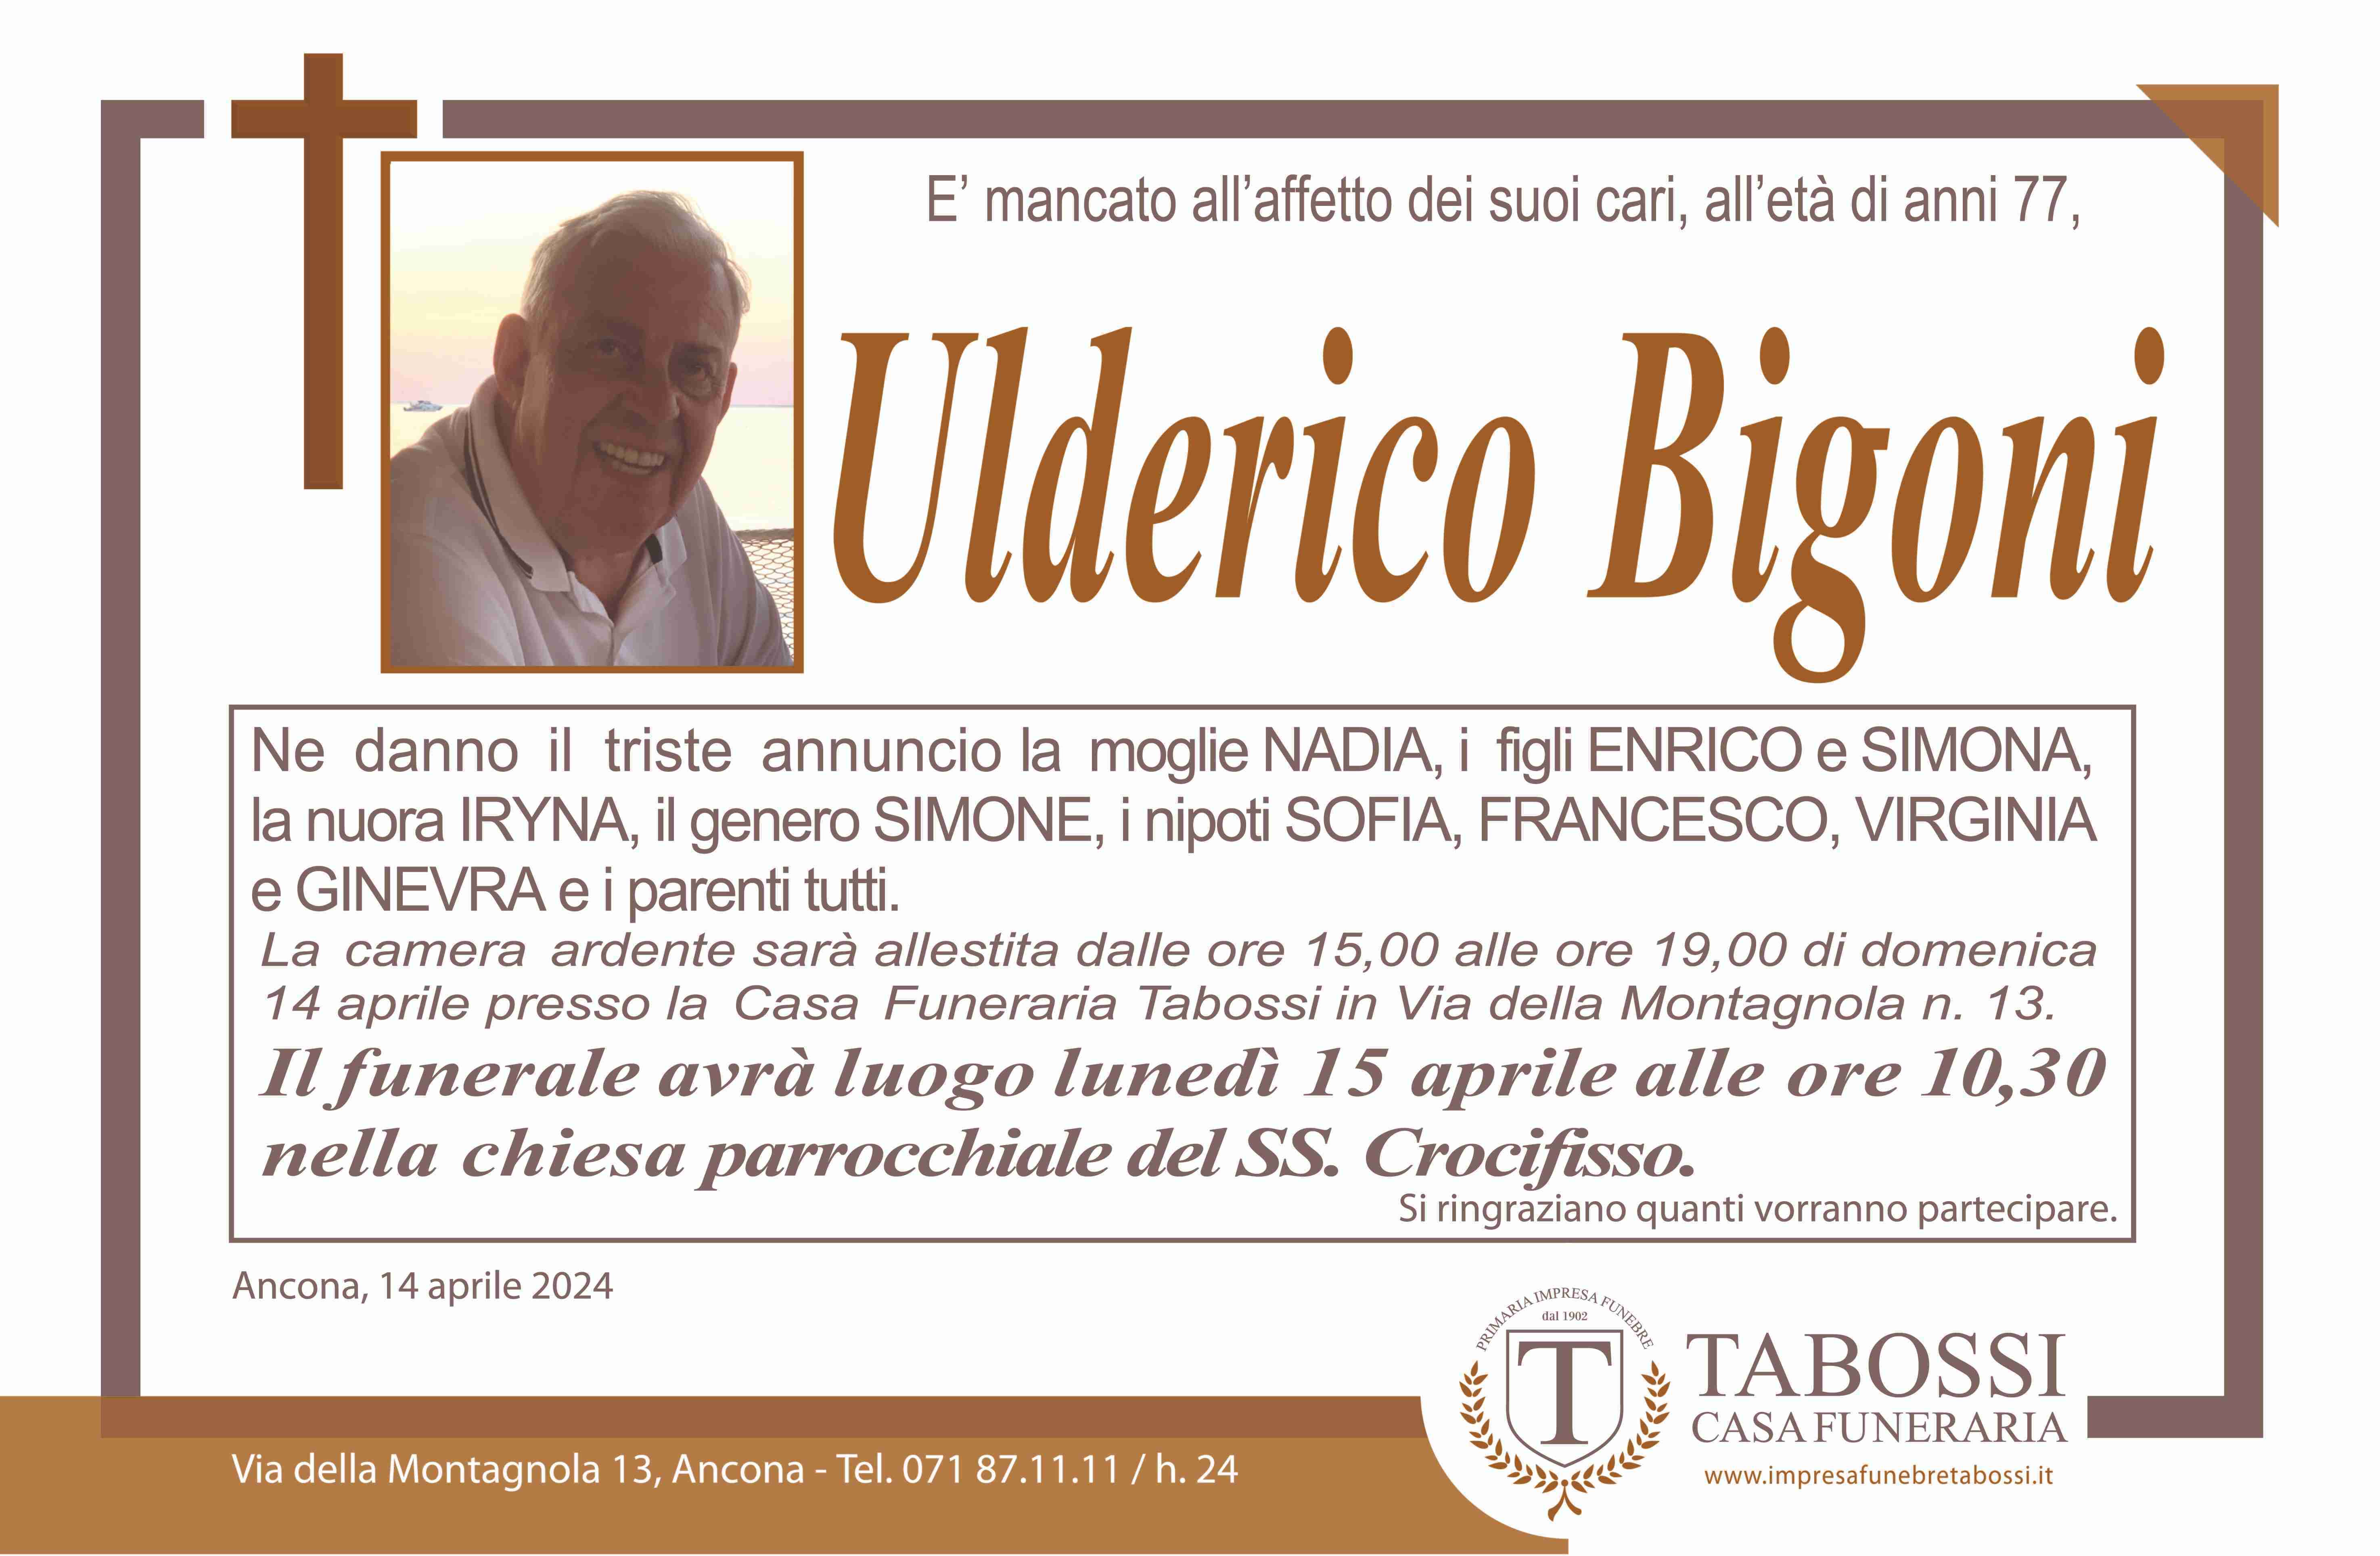 Ulderico Bigoni